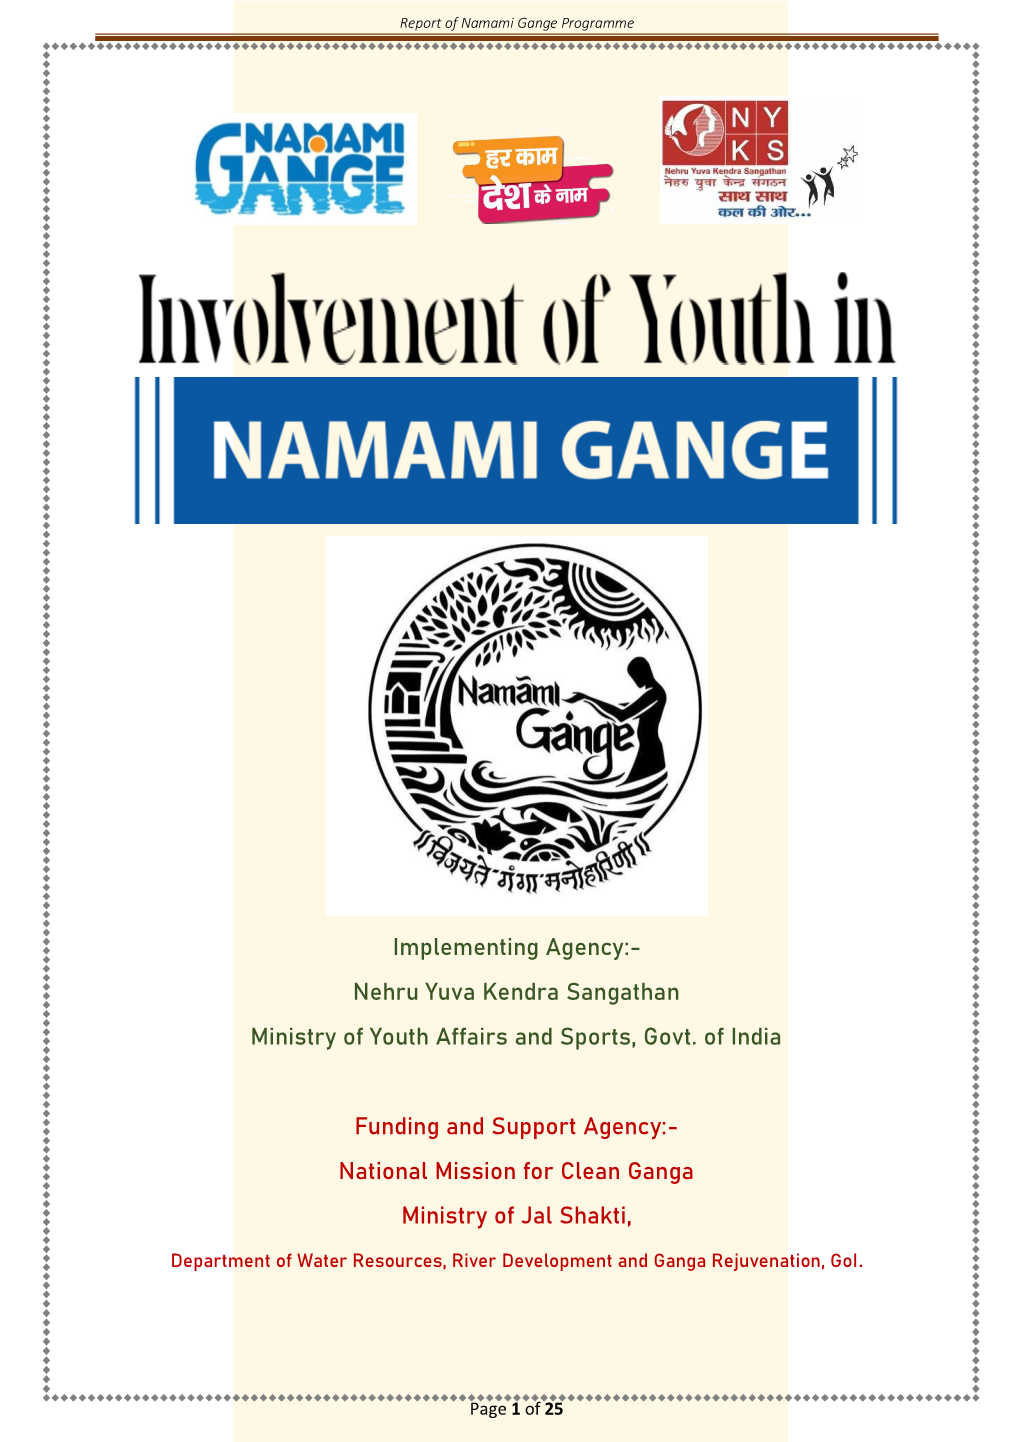 Report of Namami Gange Programme